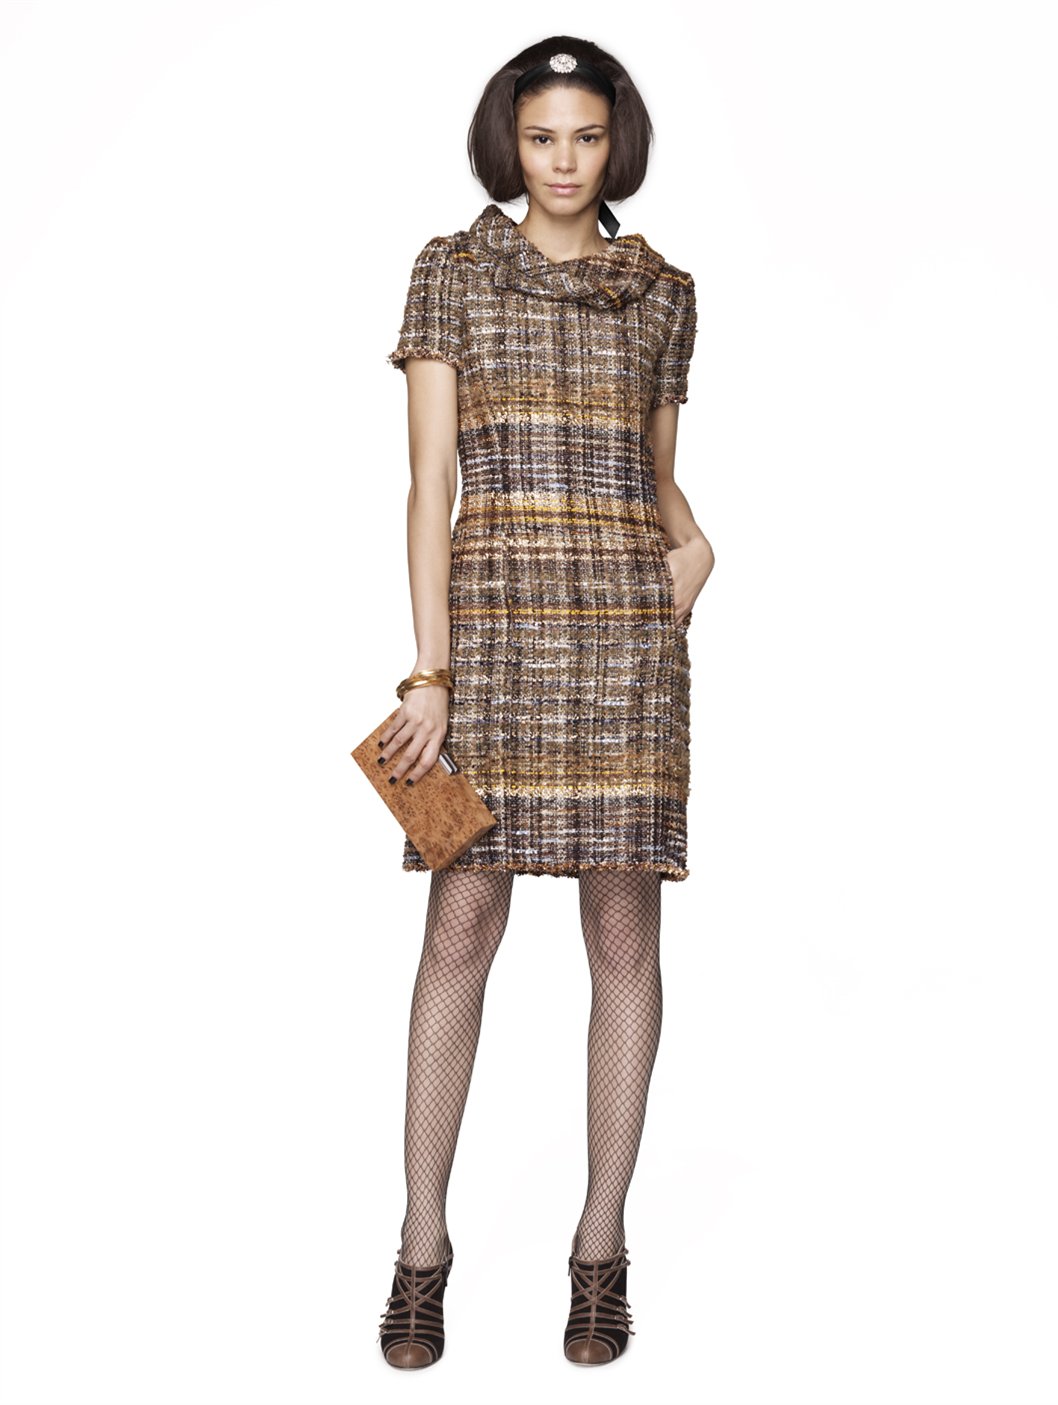 Lyst - Oscar De La Renta Metallic Tweed Short Sleeve Tunic Dress in Brown